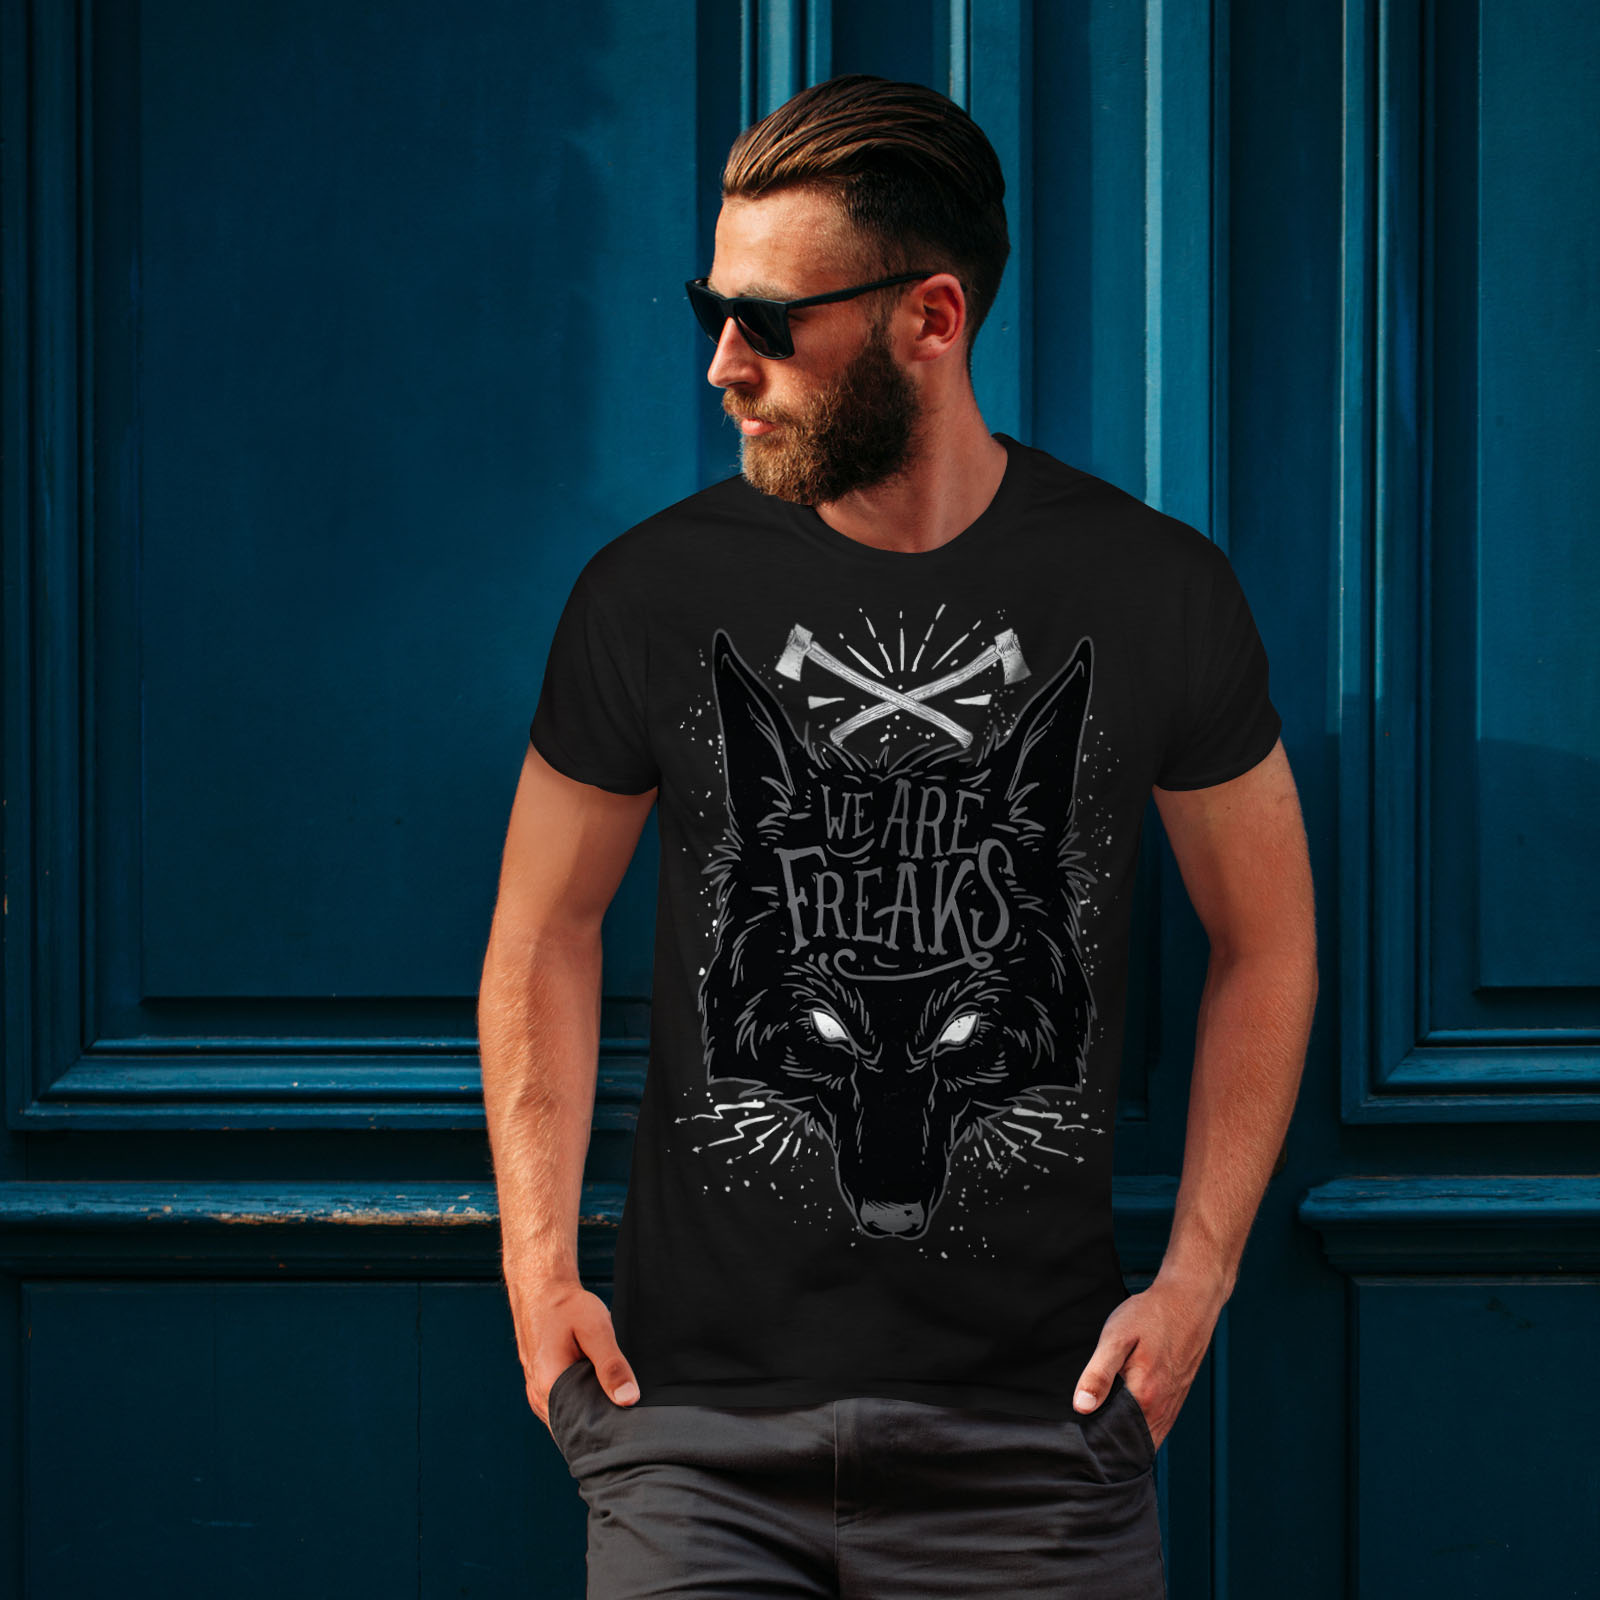 Head Graphic Design Printed Tee Wellcoda Wolf Freak Mens T-shirt